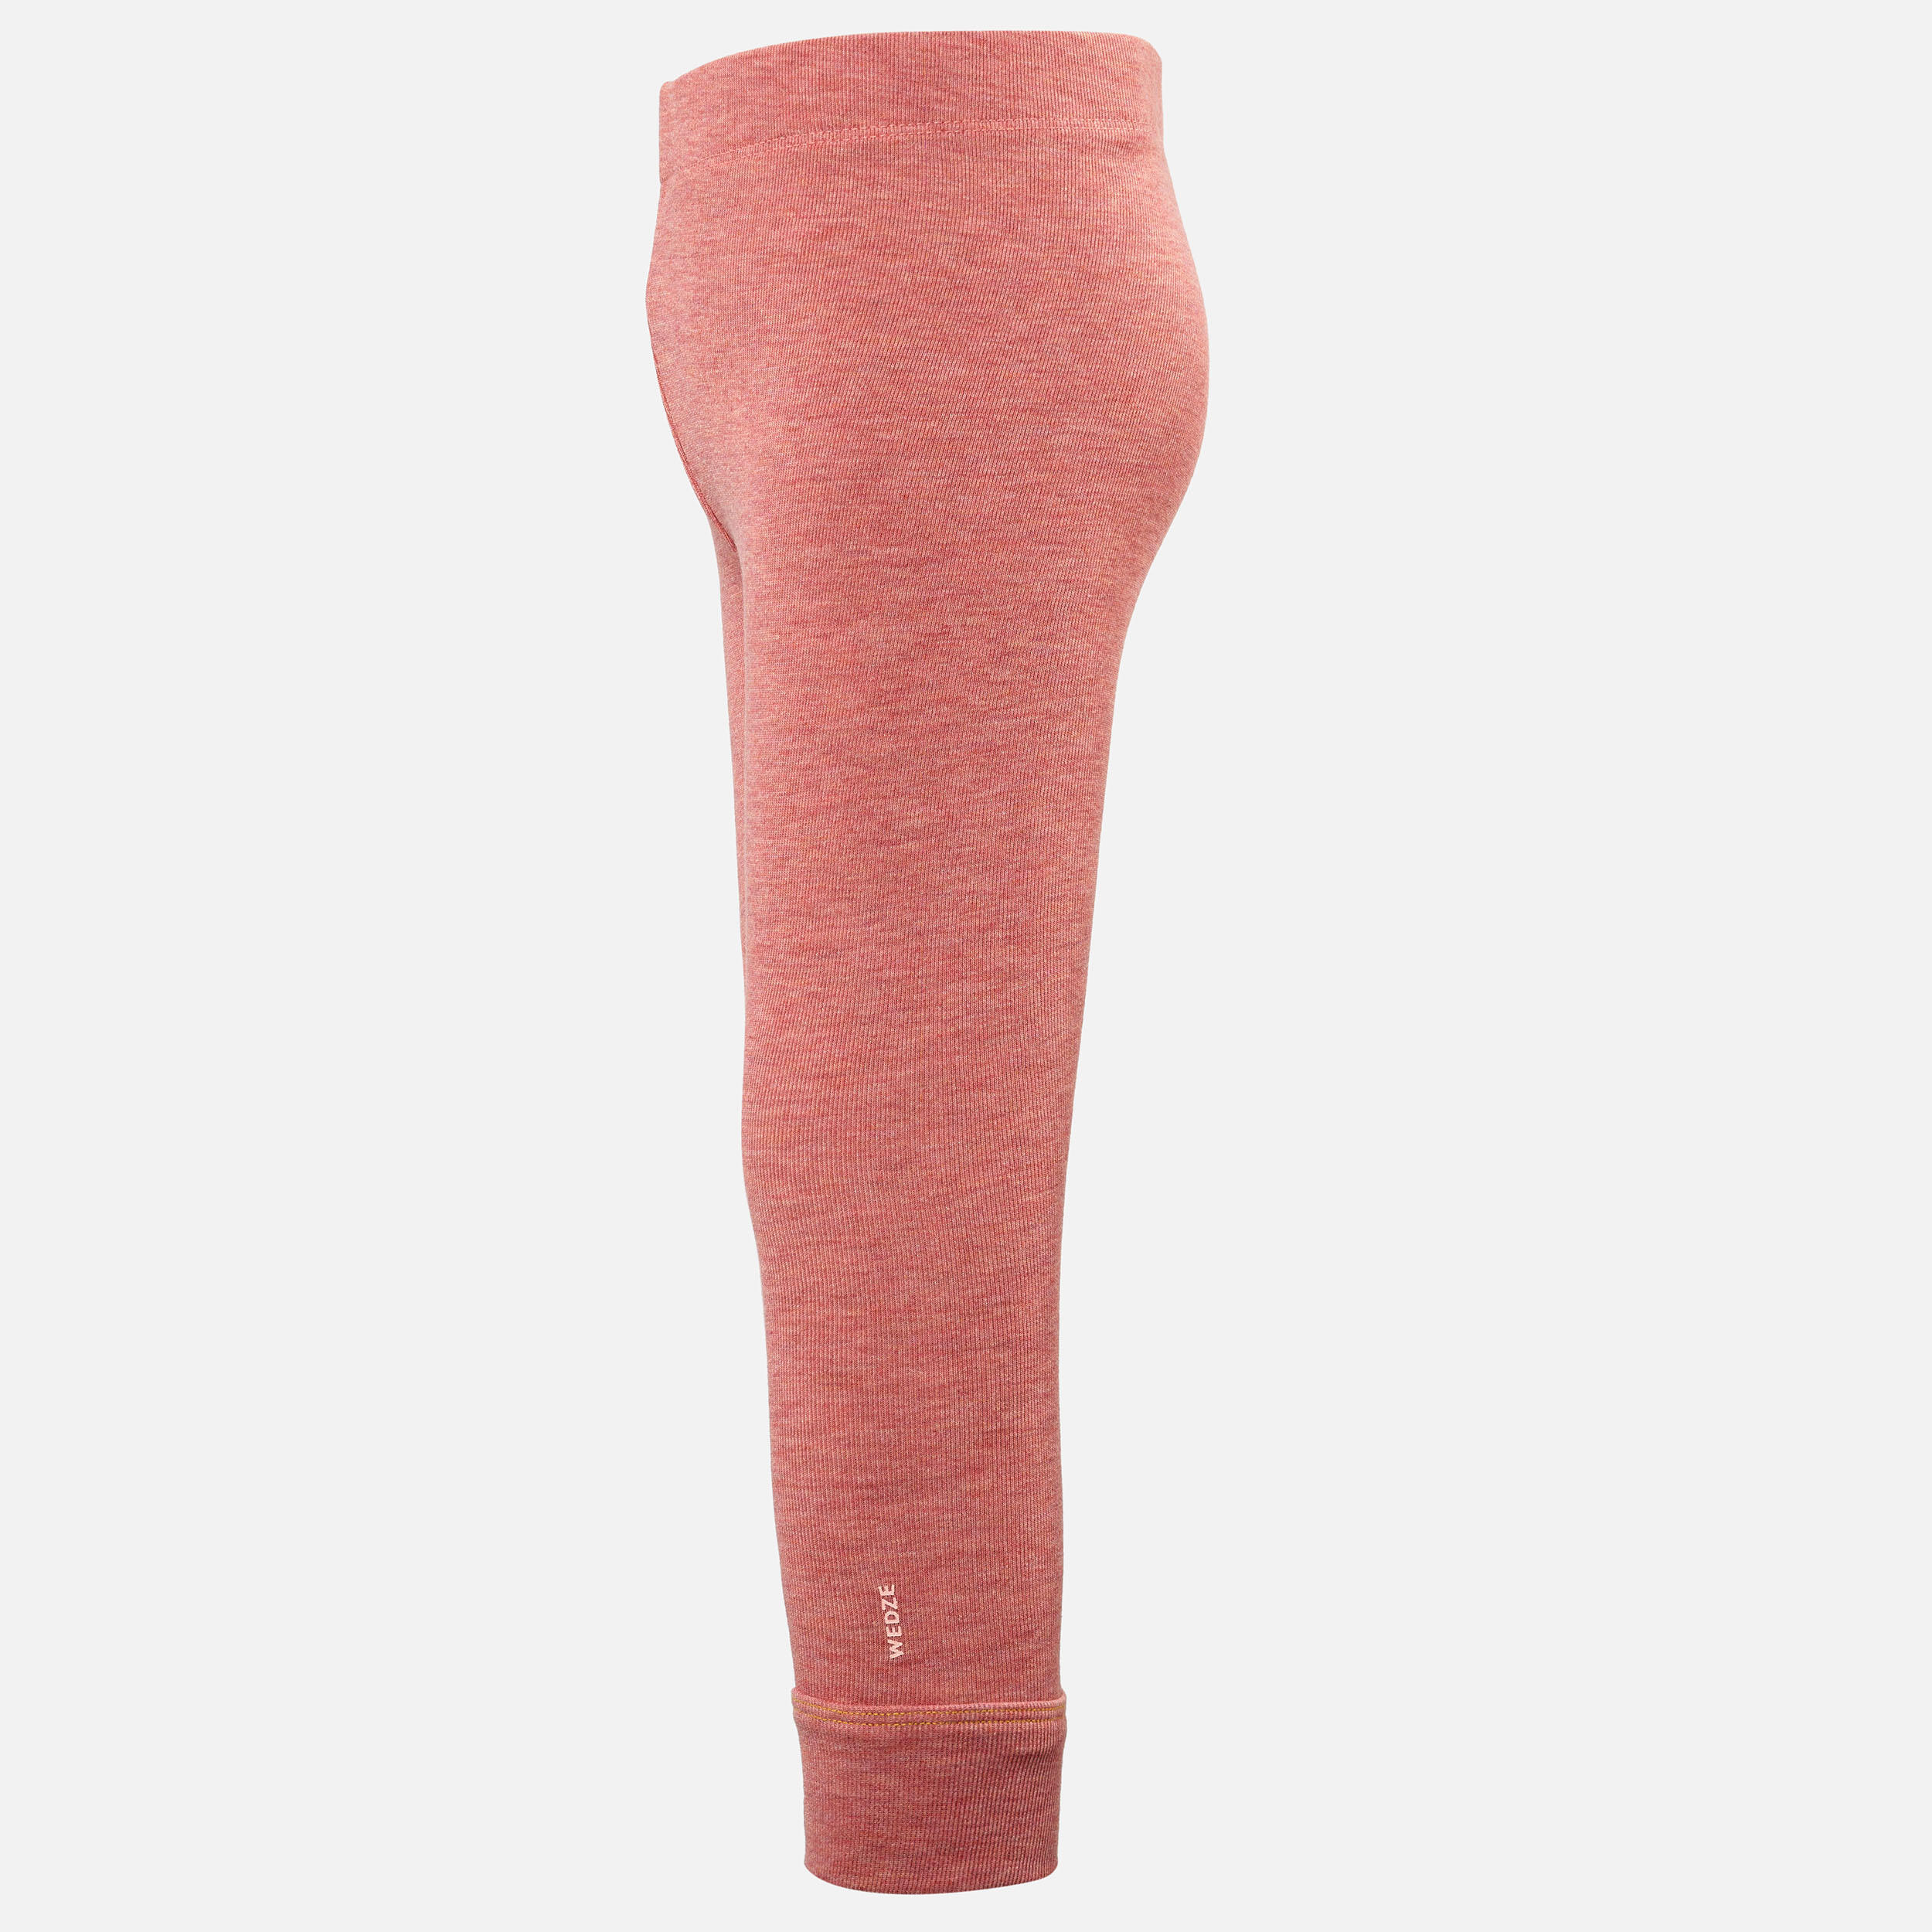 Base layer trousers, Baby ski leggings - WARM pink 3/7